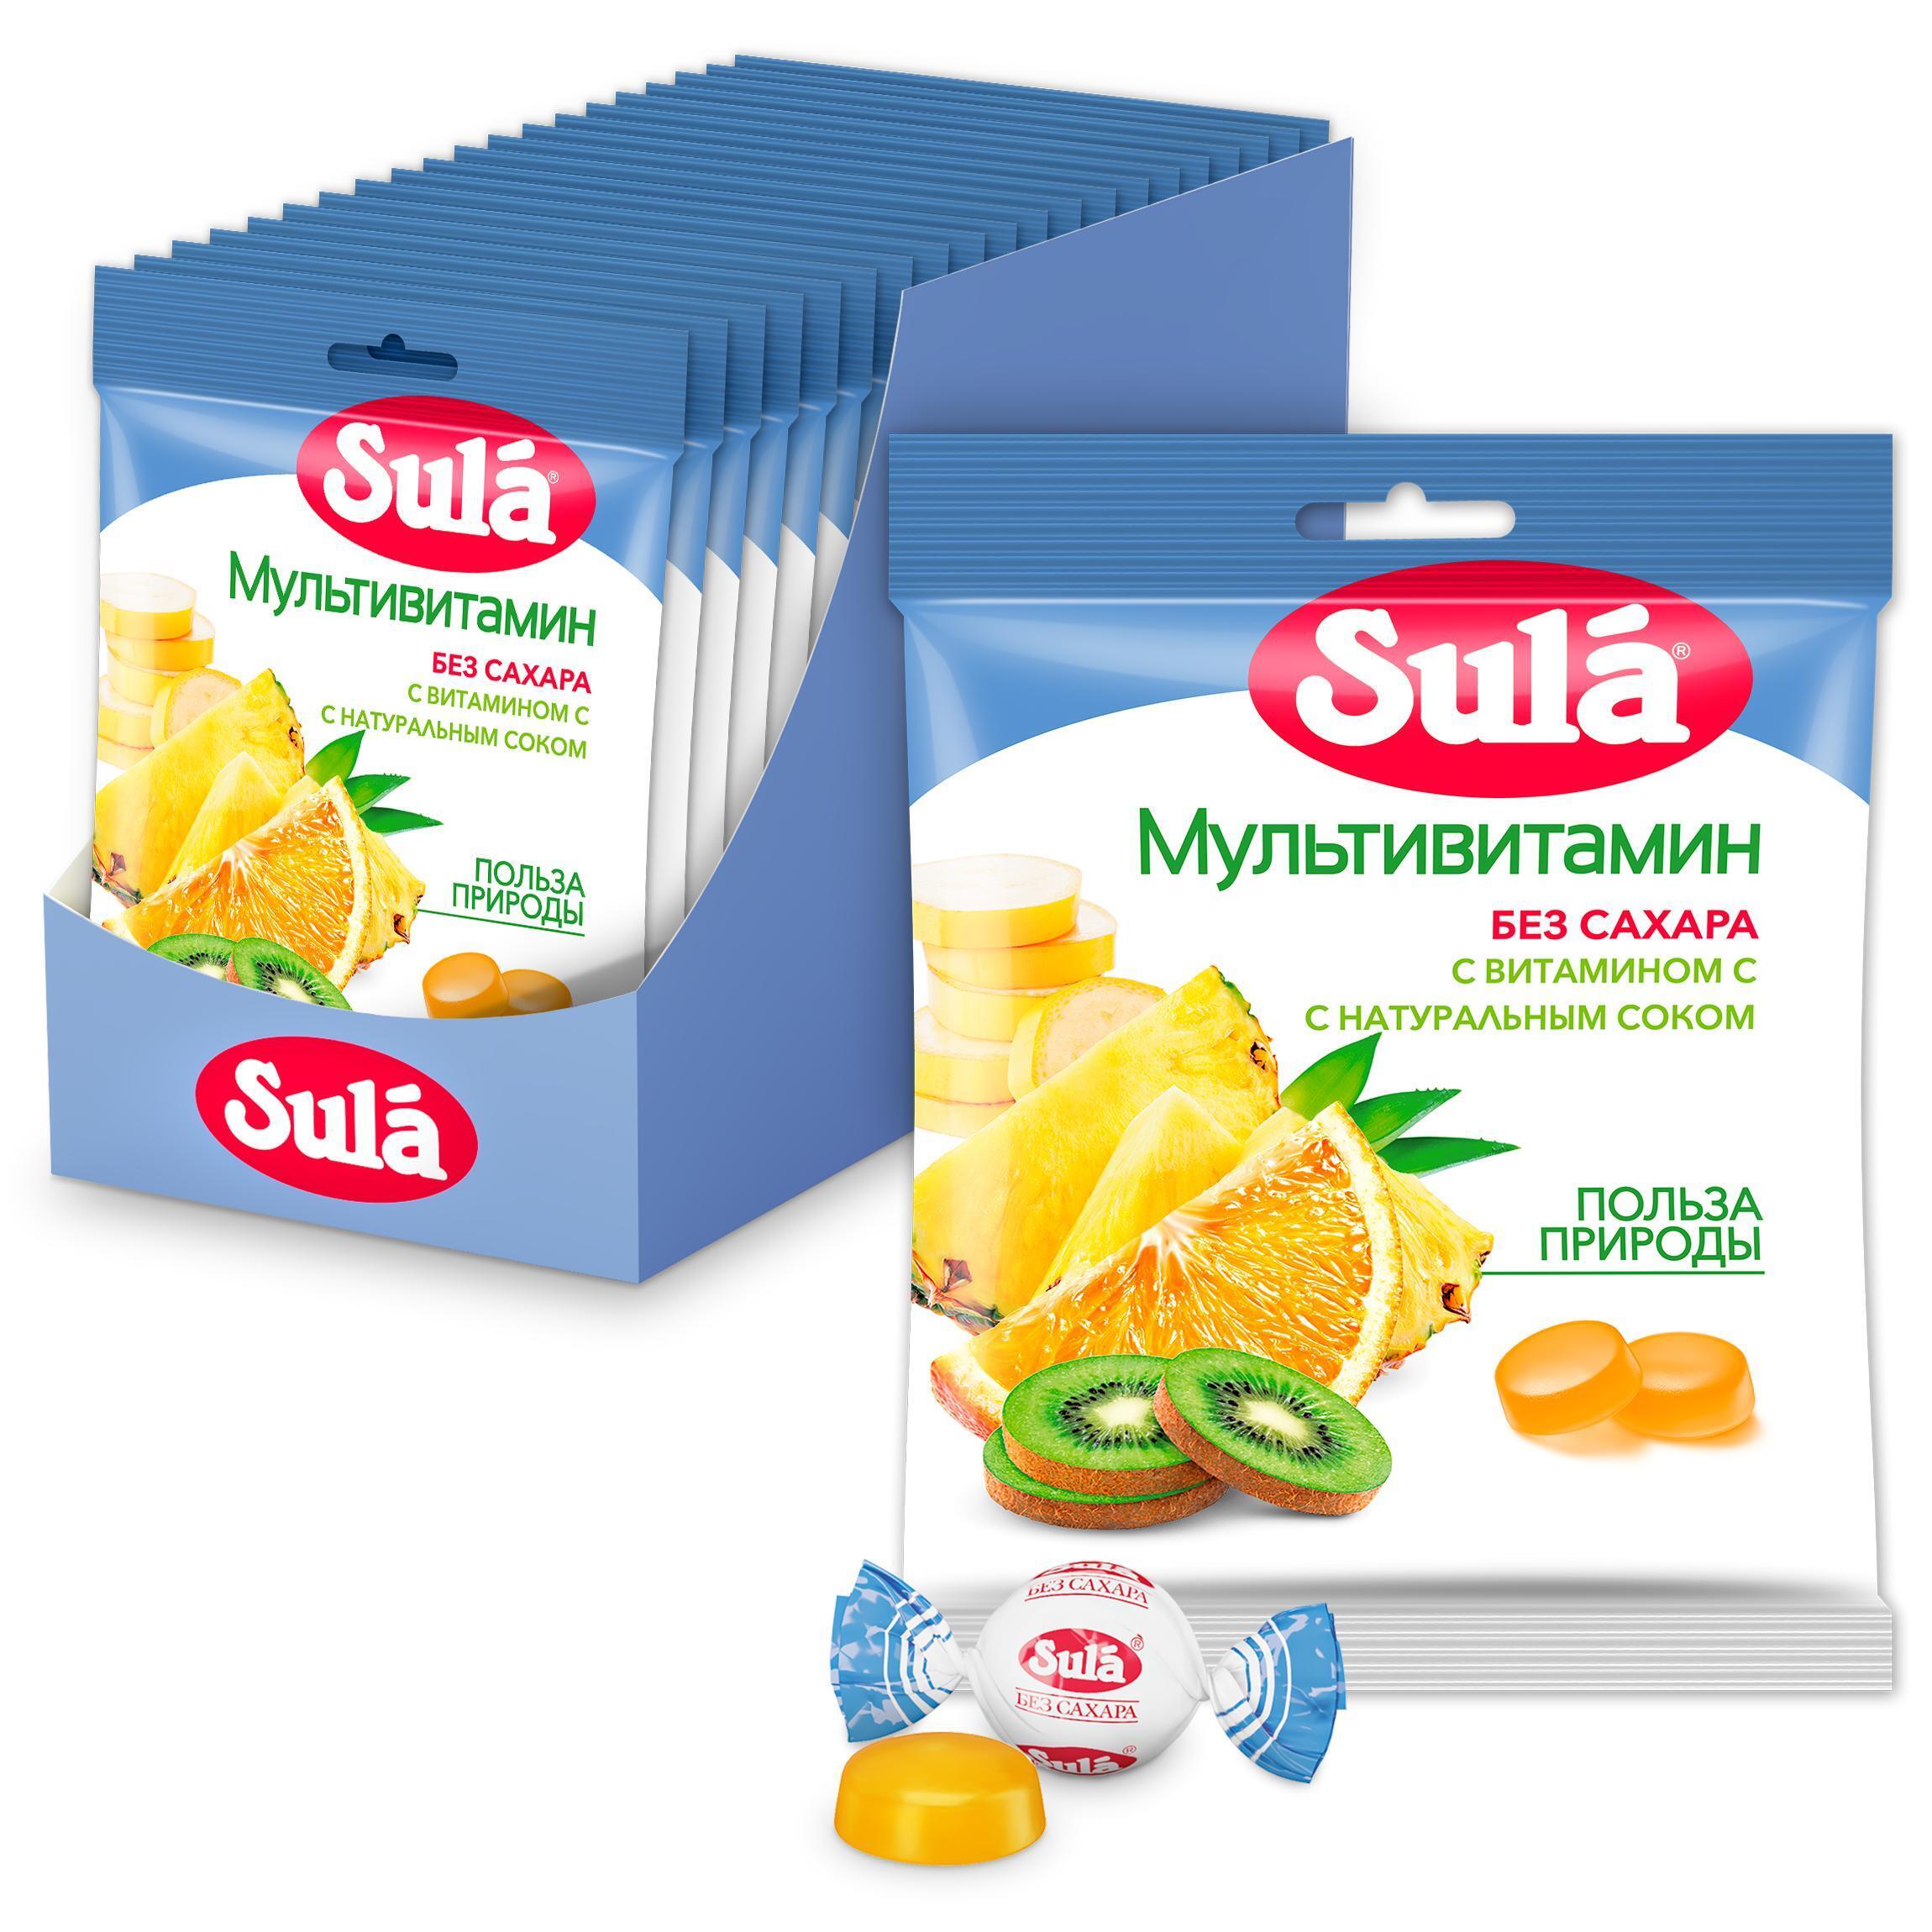 Sula без сахара купить. Зула леденцы мультивитамин 60г. _Sula sula леденцы без сахара. Sula без сахара мультивитамин 60г. Леденцы Зула мультивитамин 60 гр пакет.